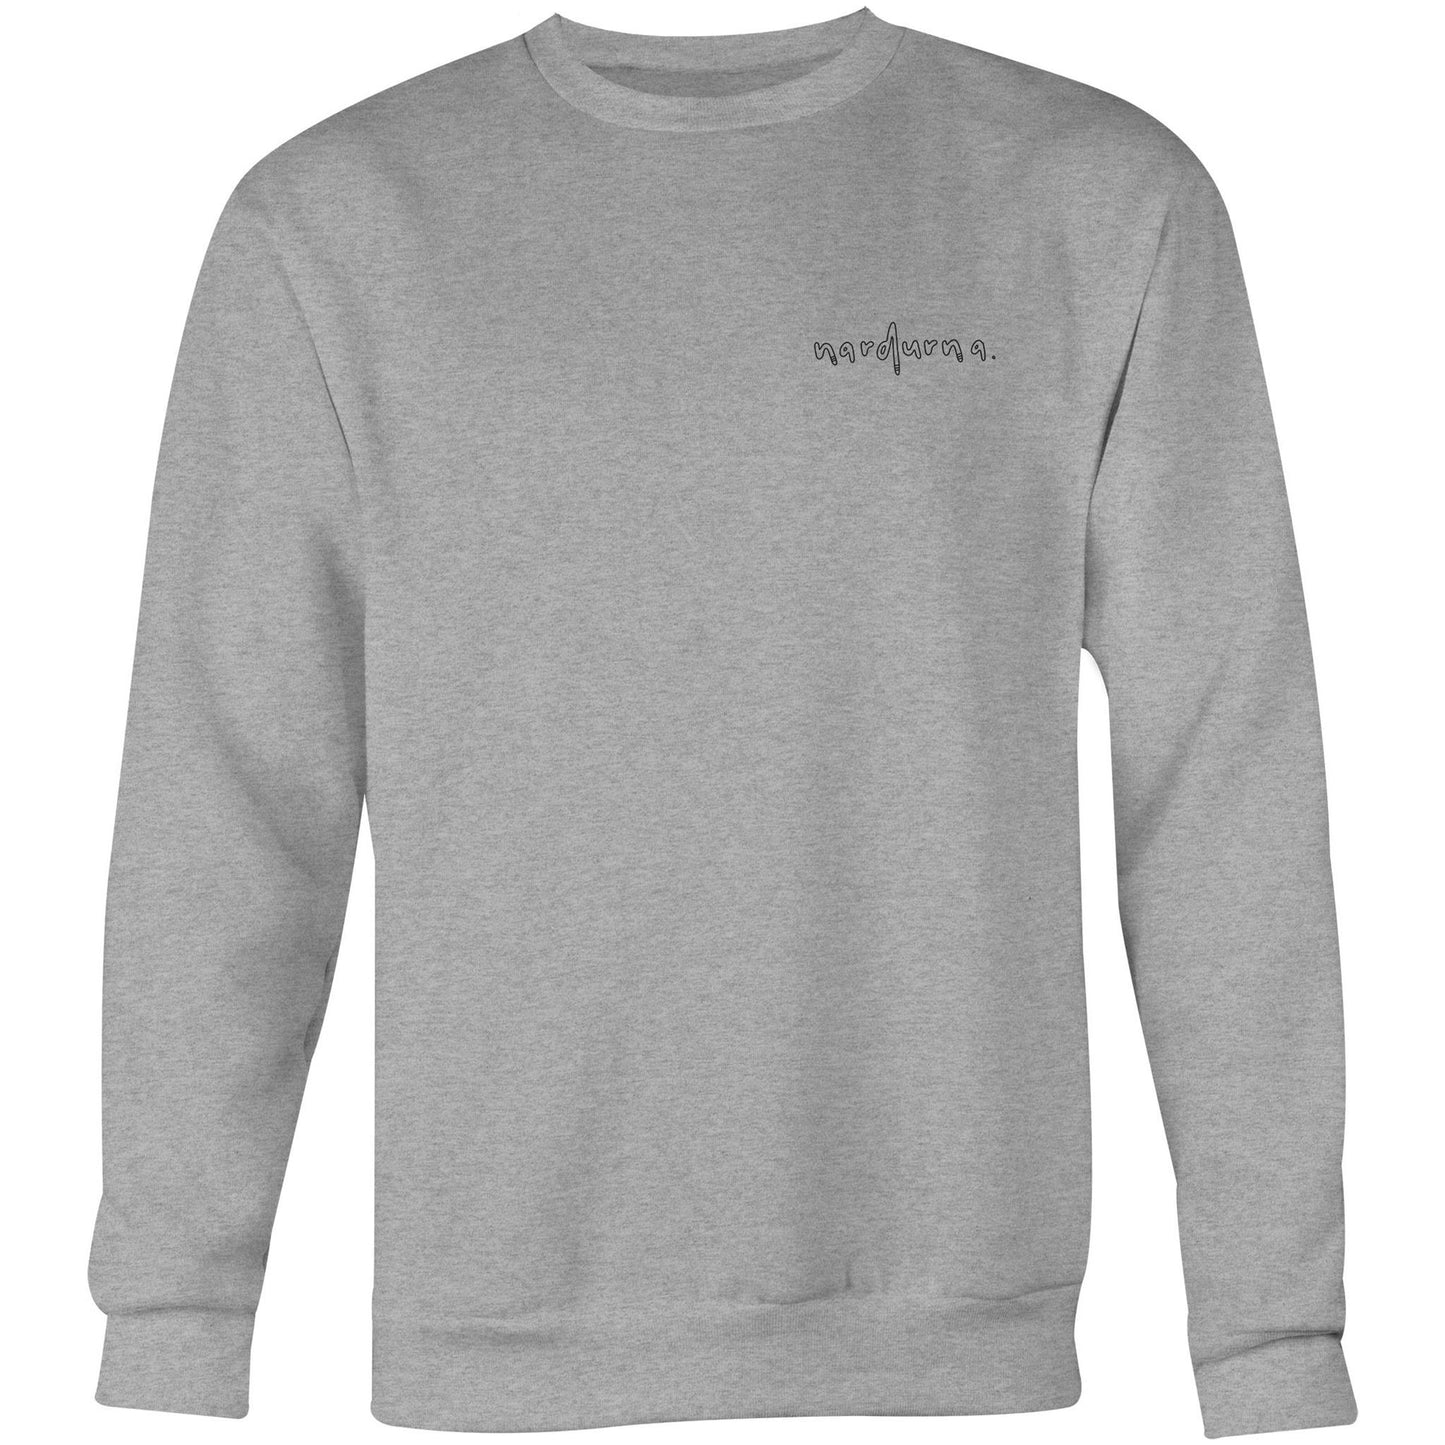 nardurna crew sweatshirt- grey, black, coal